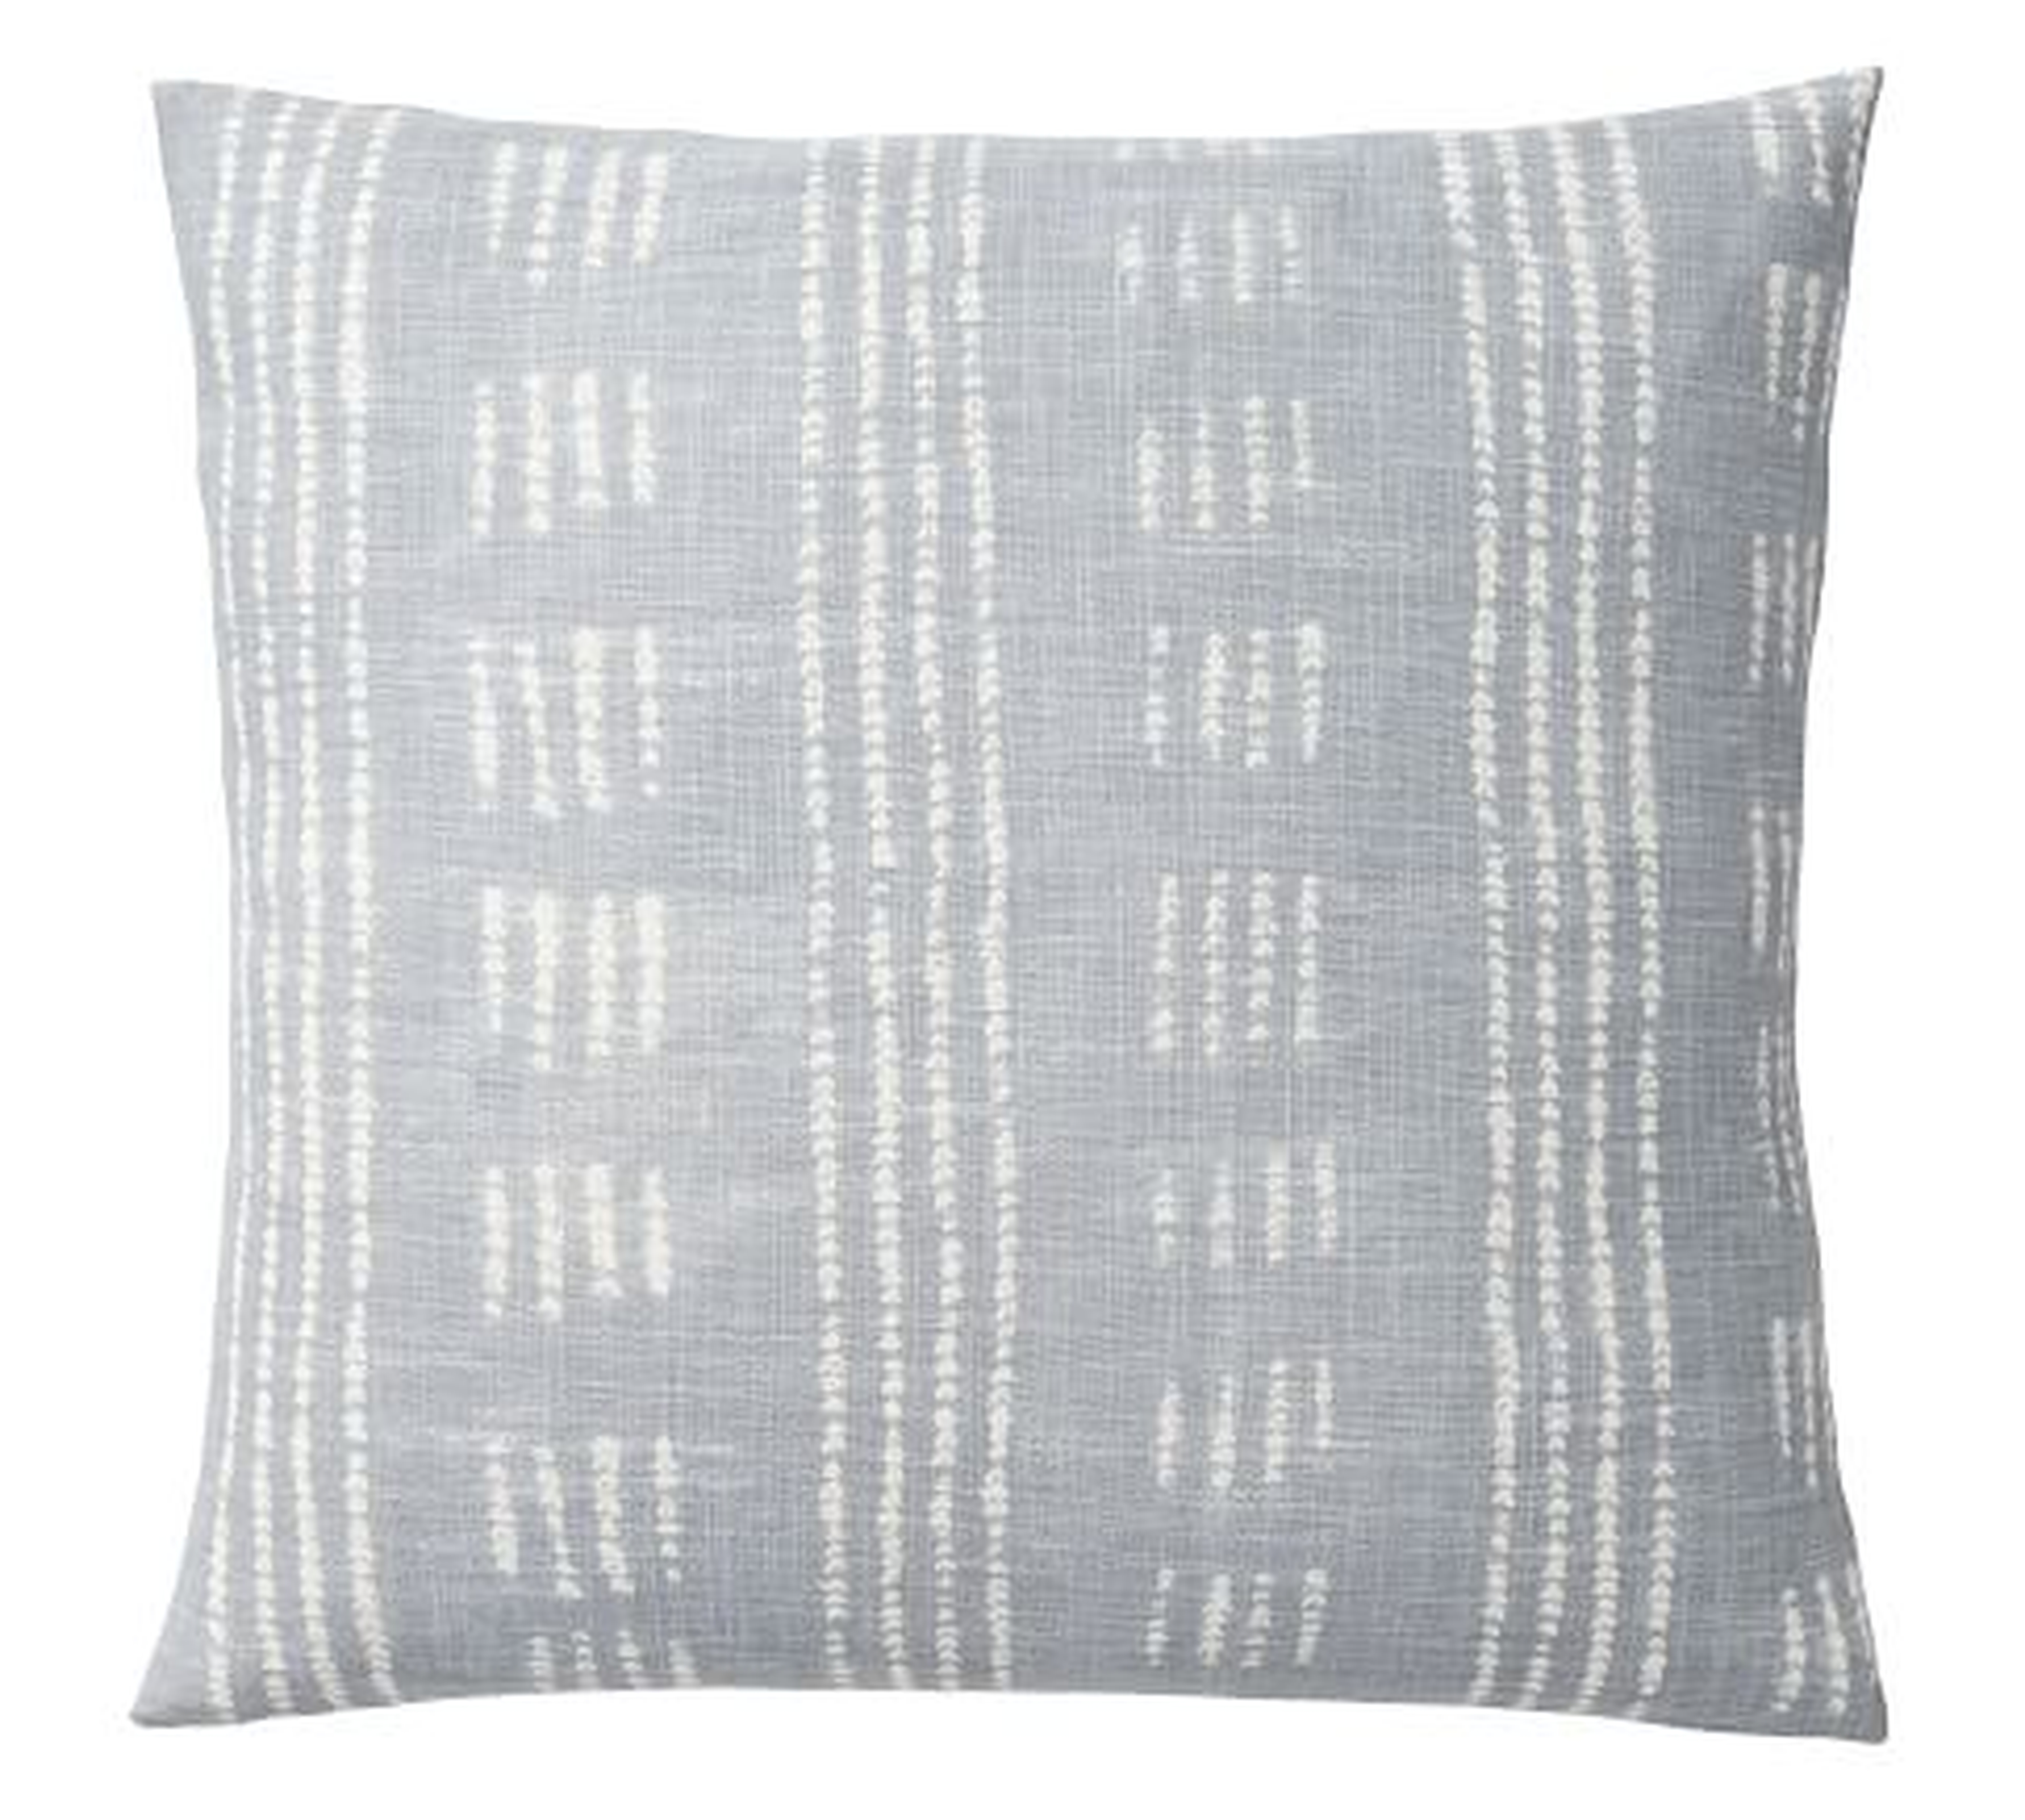 Shibori Dot Print Pillow Cover - No Insert - Pottery Barn